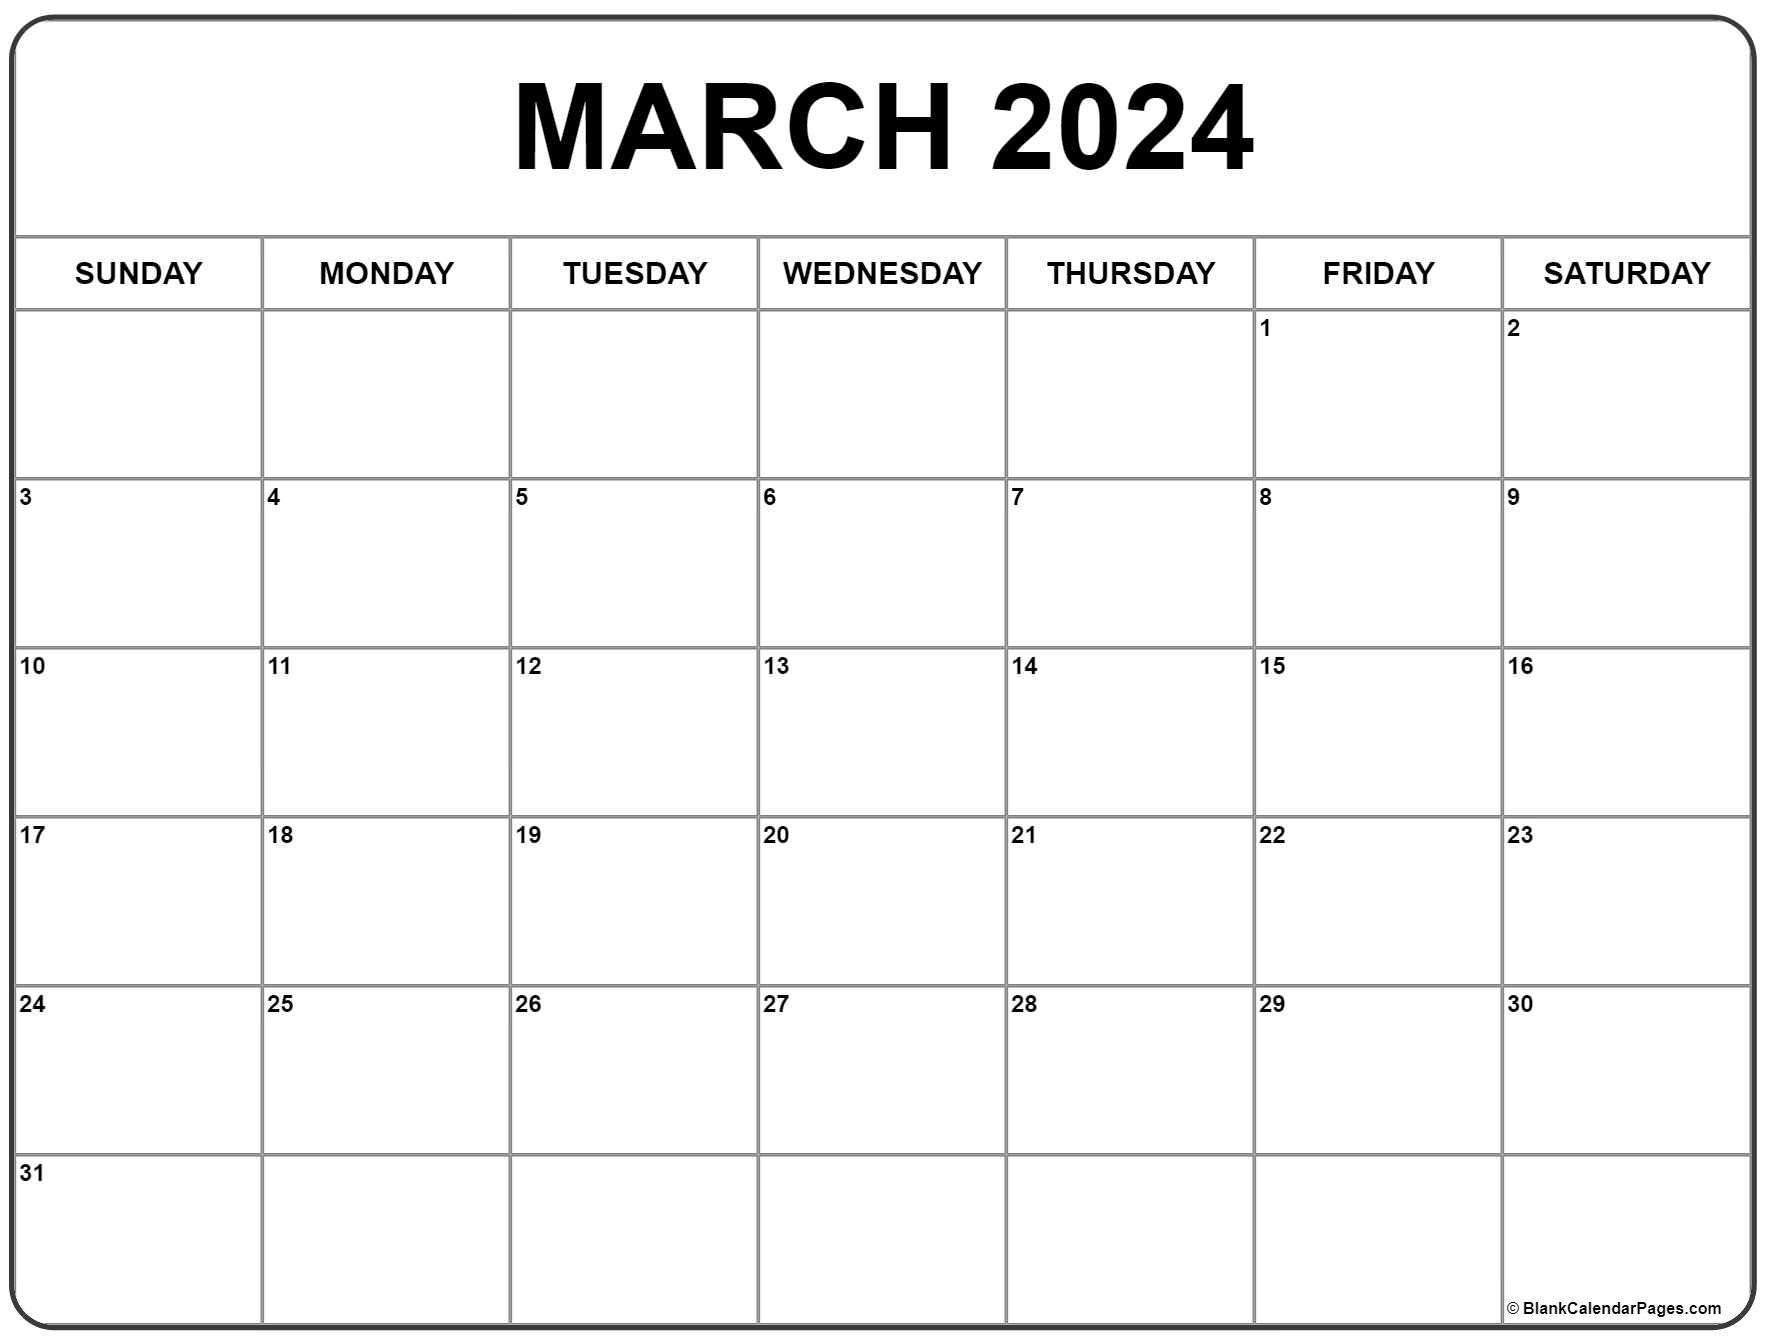 Free March Calendar 2022 March 2022 Calendar | Free Printable Calendar Templates